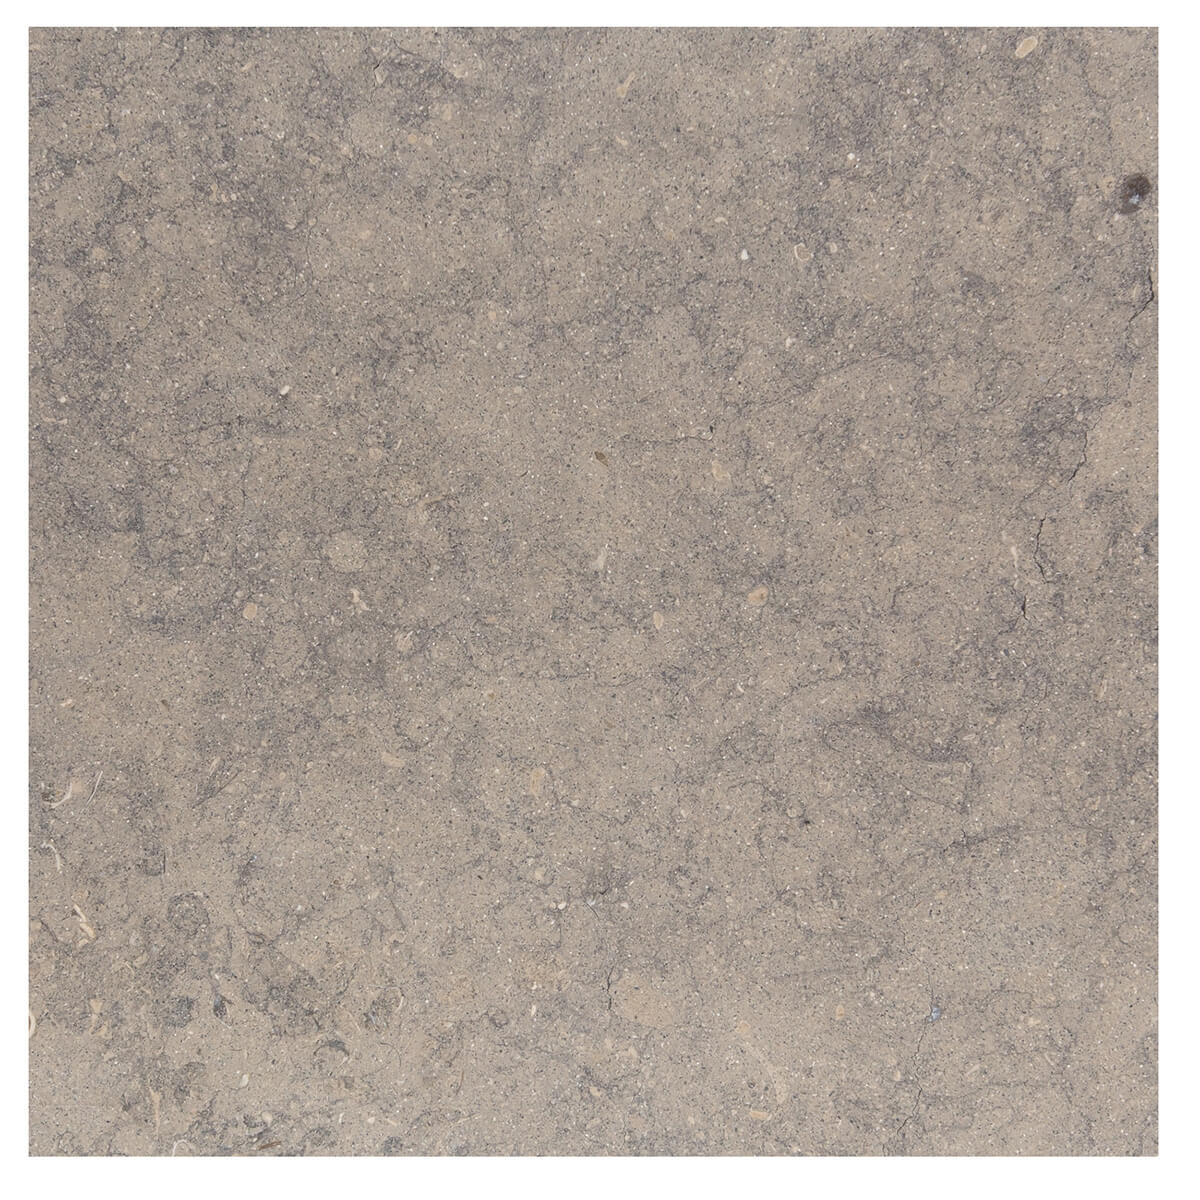 haussmann cote d azur limestone square natural stone field tile 12x12 honed